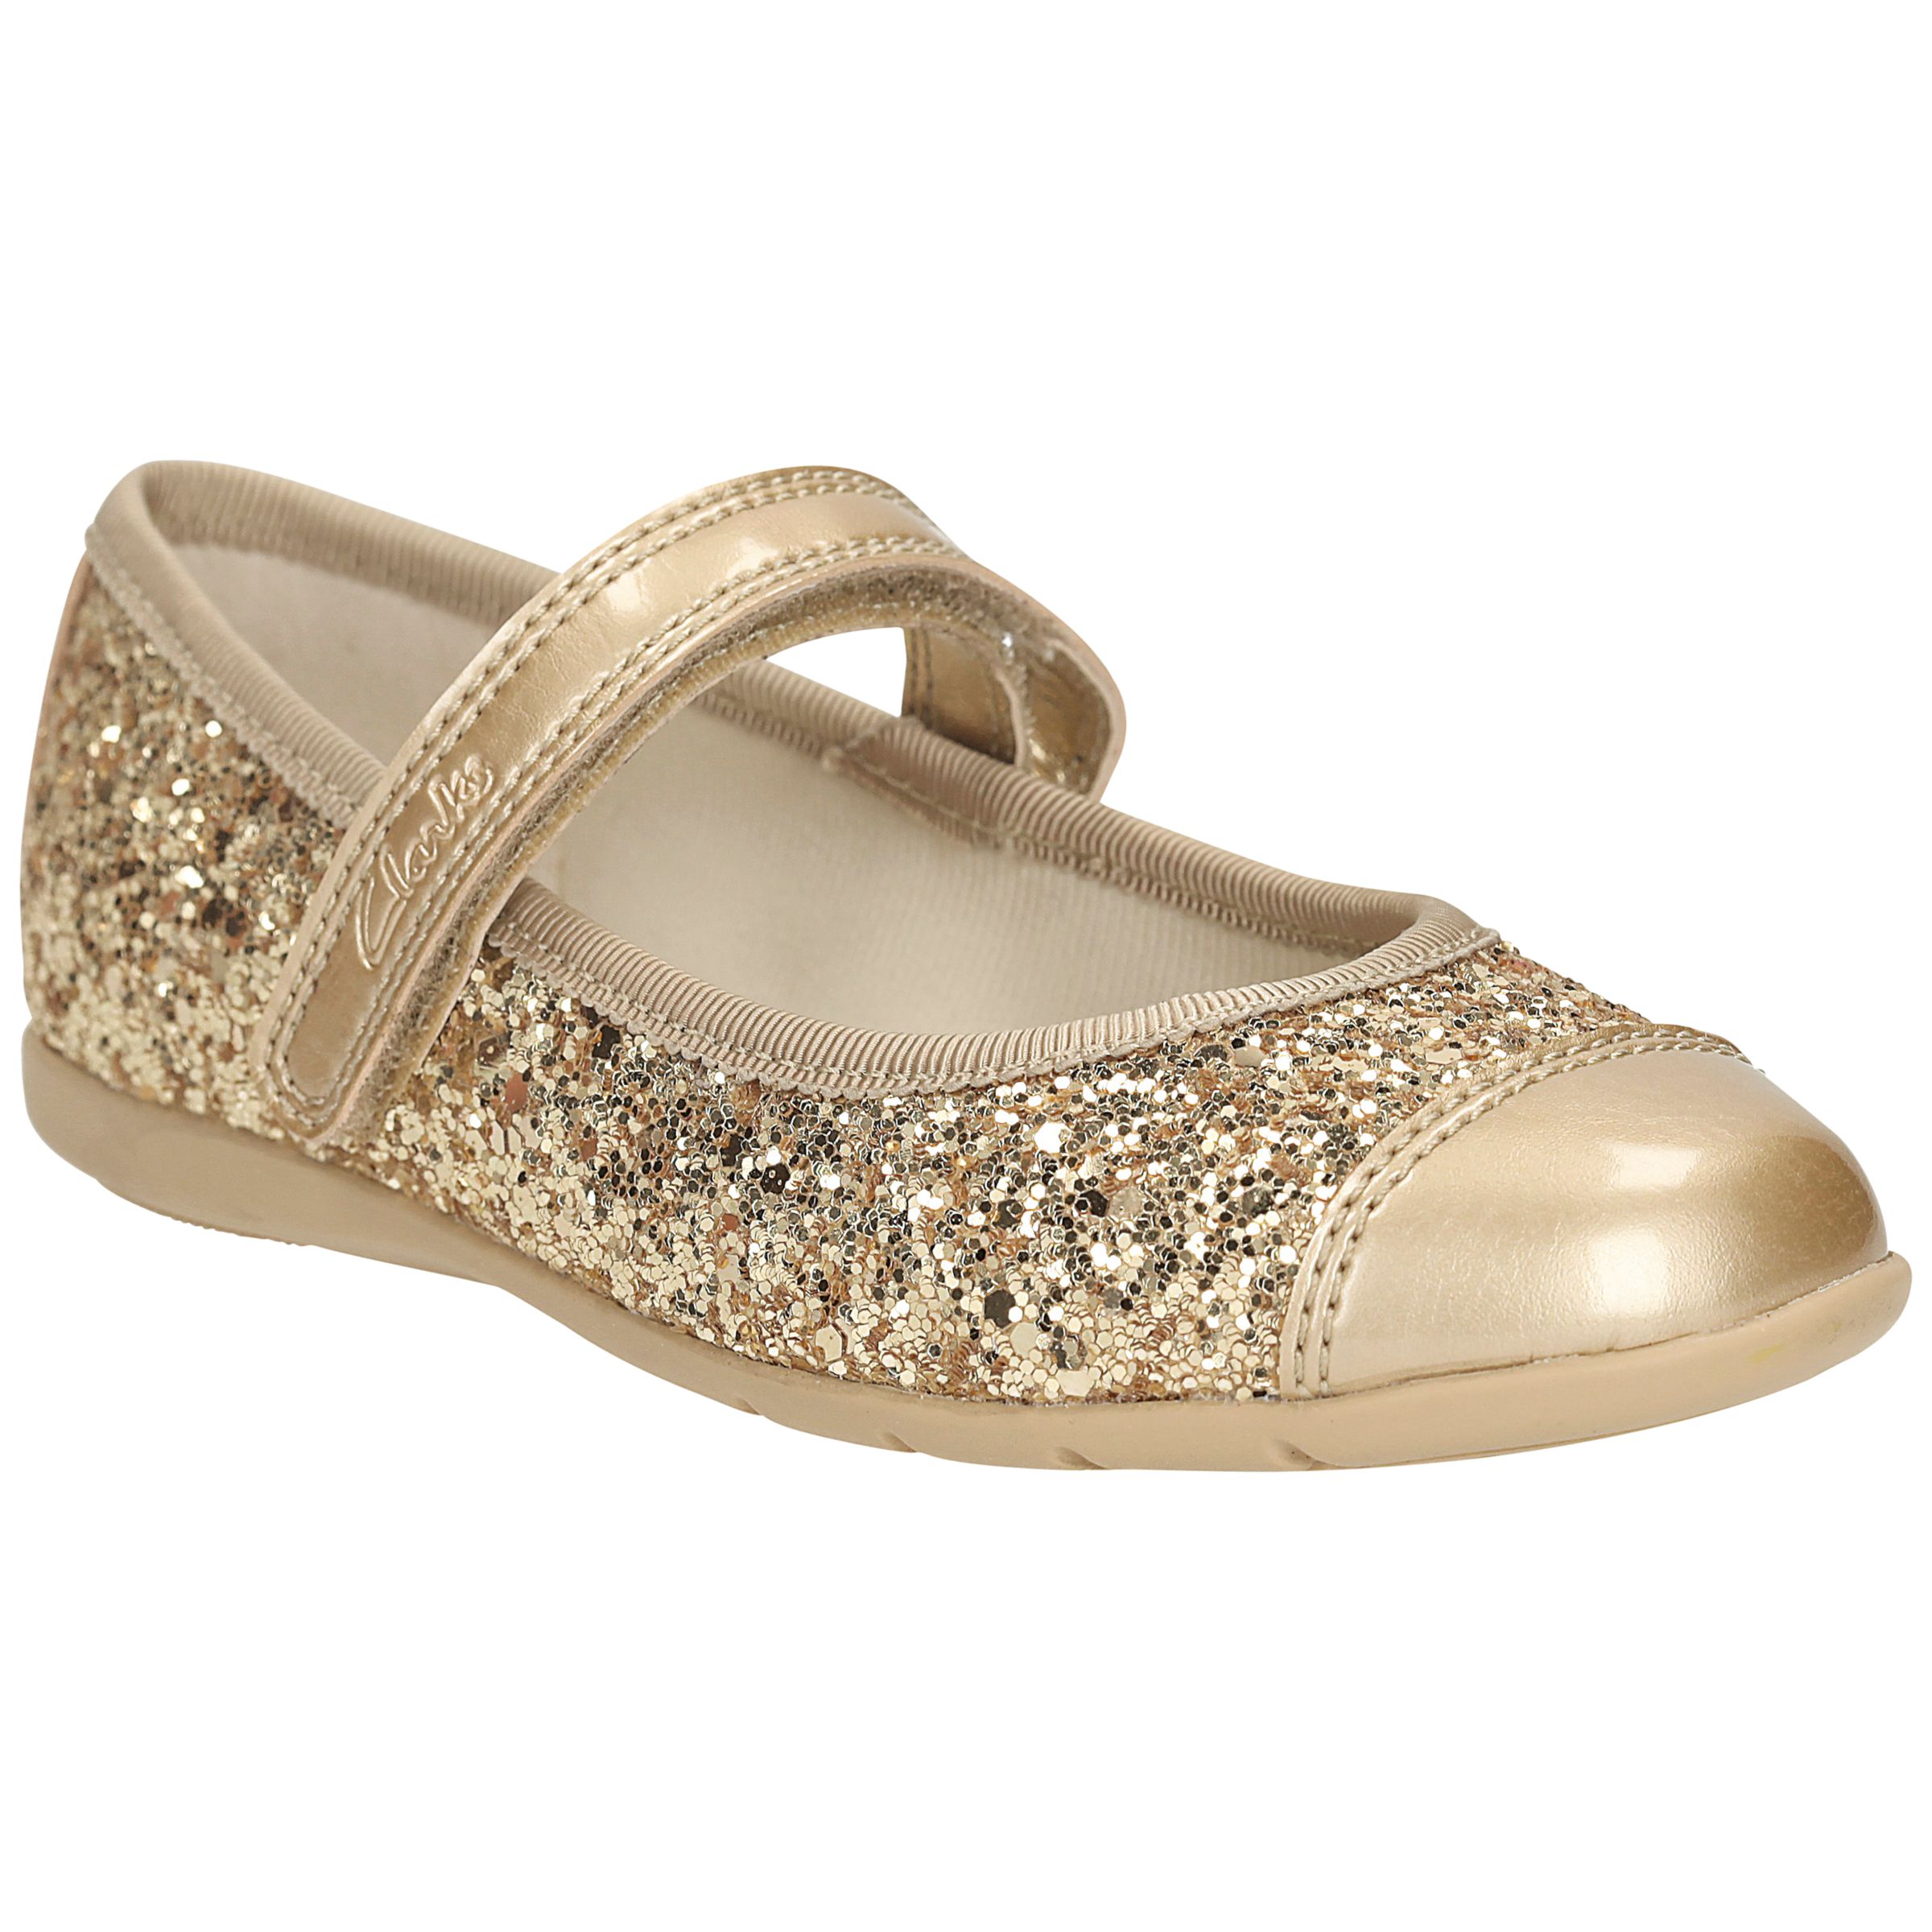 clarks sparkly sandals